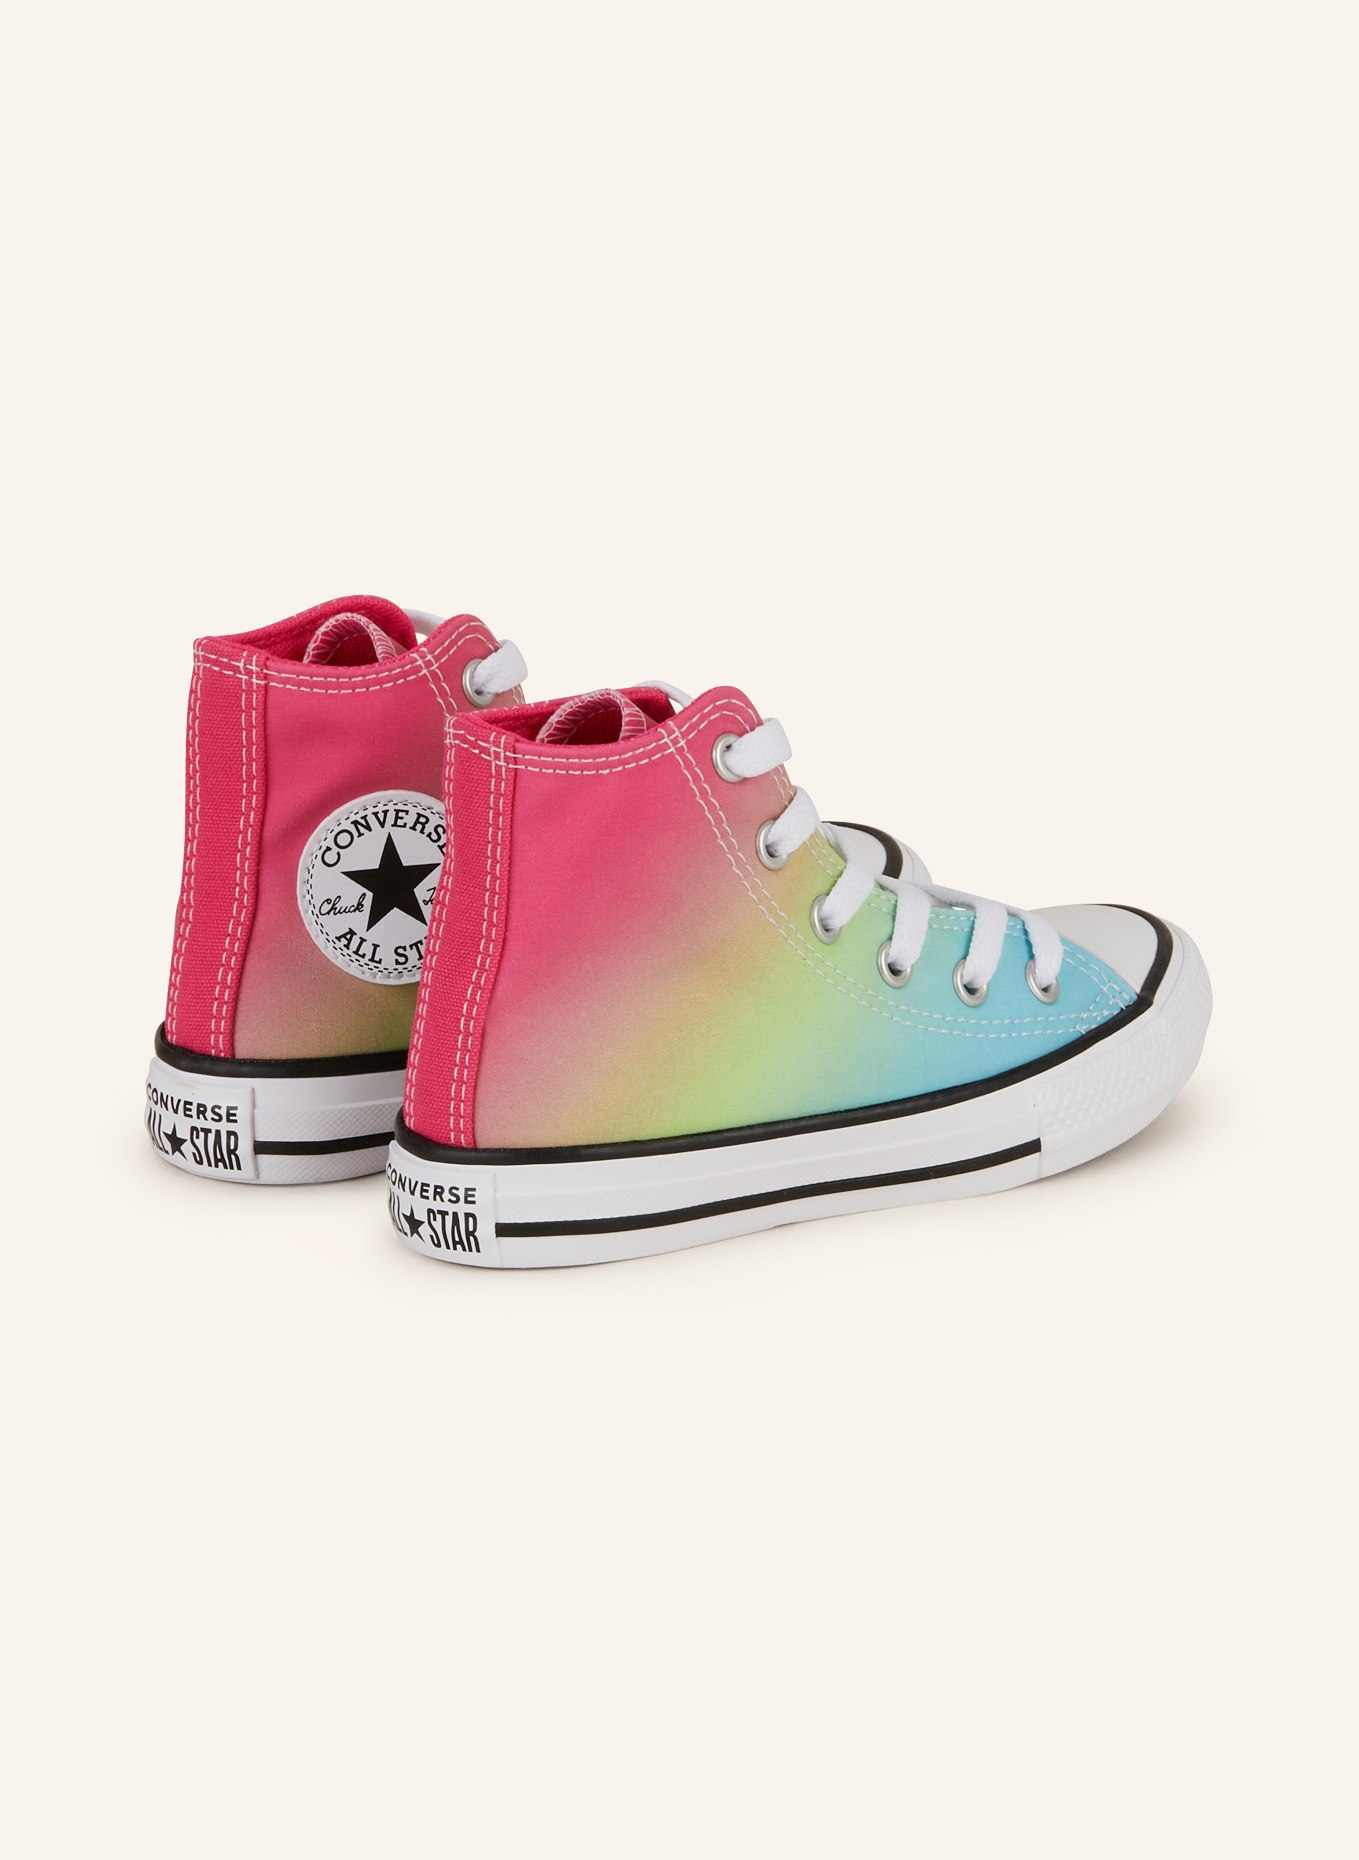 CONVERSE Hightop-Sneaker CHUCK TALYLOR ALL STAR, Farbe: PINK/ HELLGRÜN (Bild 2)